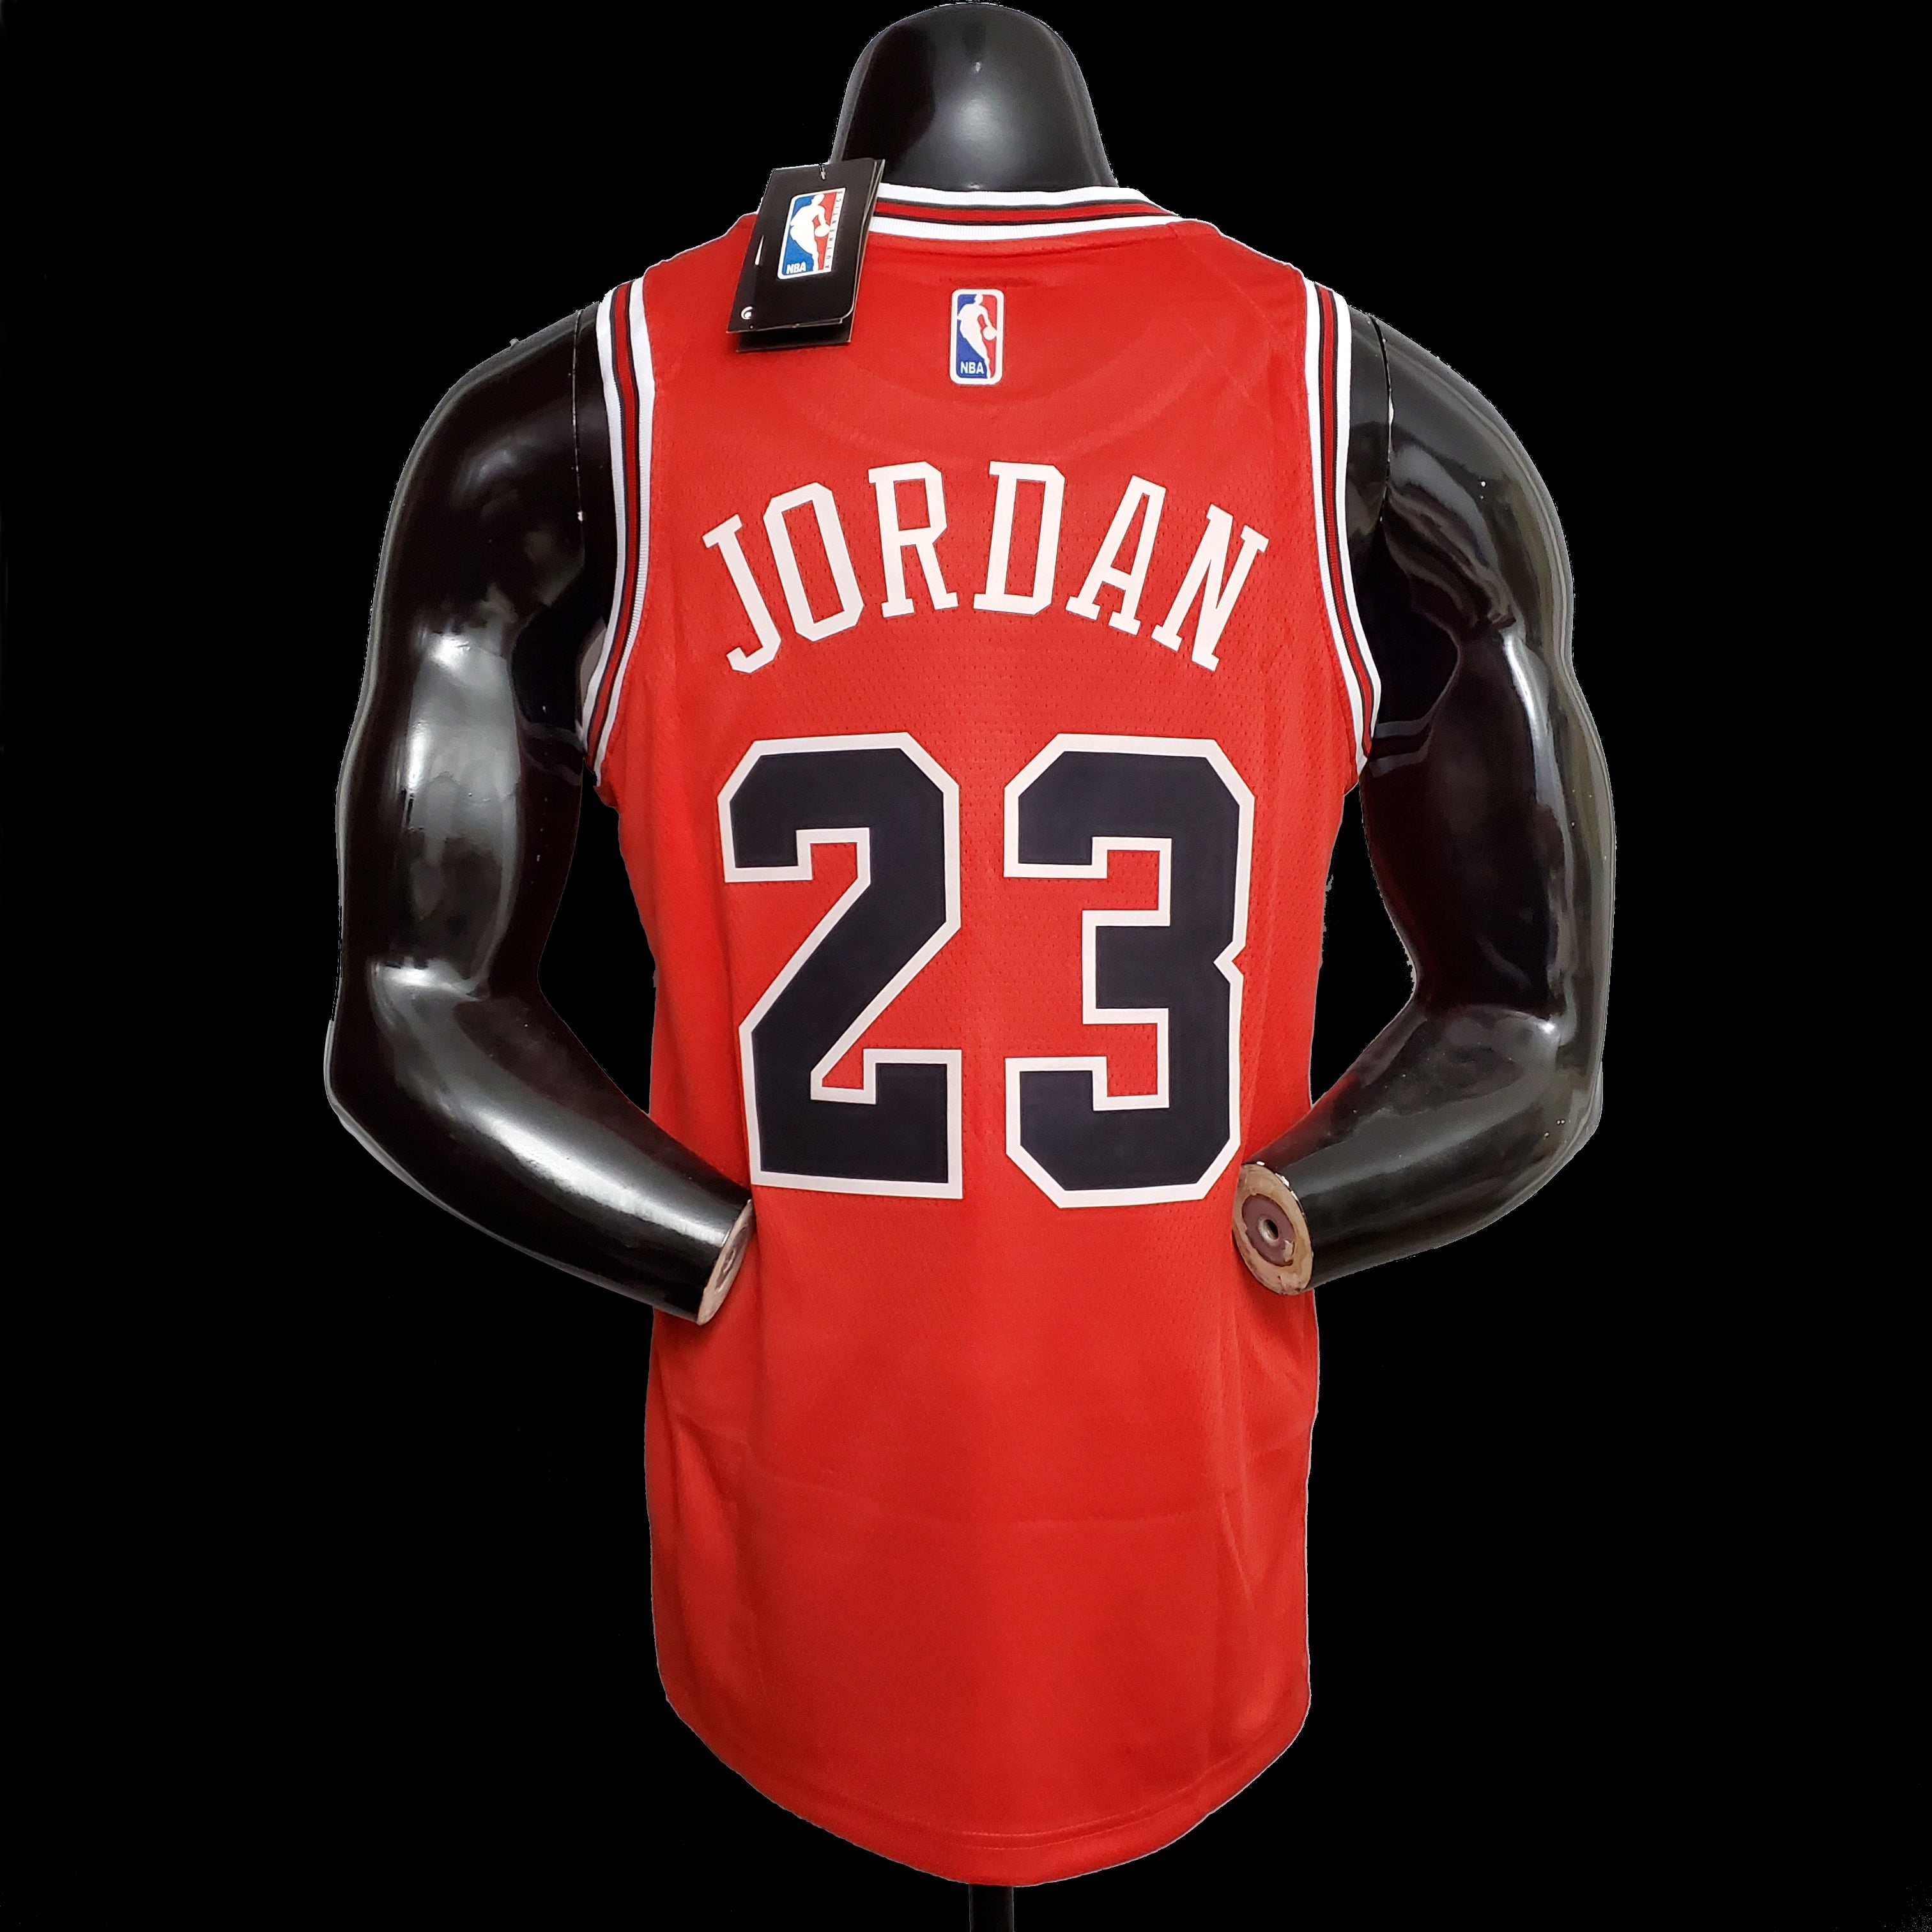 Chicago Bulls #23 Michael Jordan Black Swingman Stitched Basketball Jersey